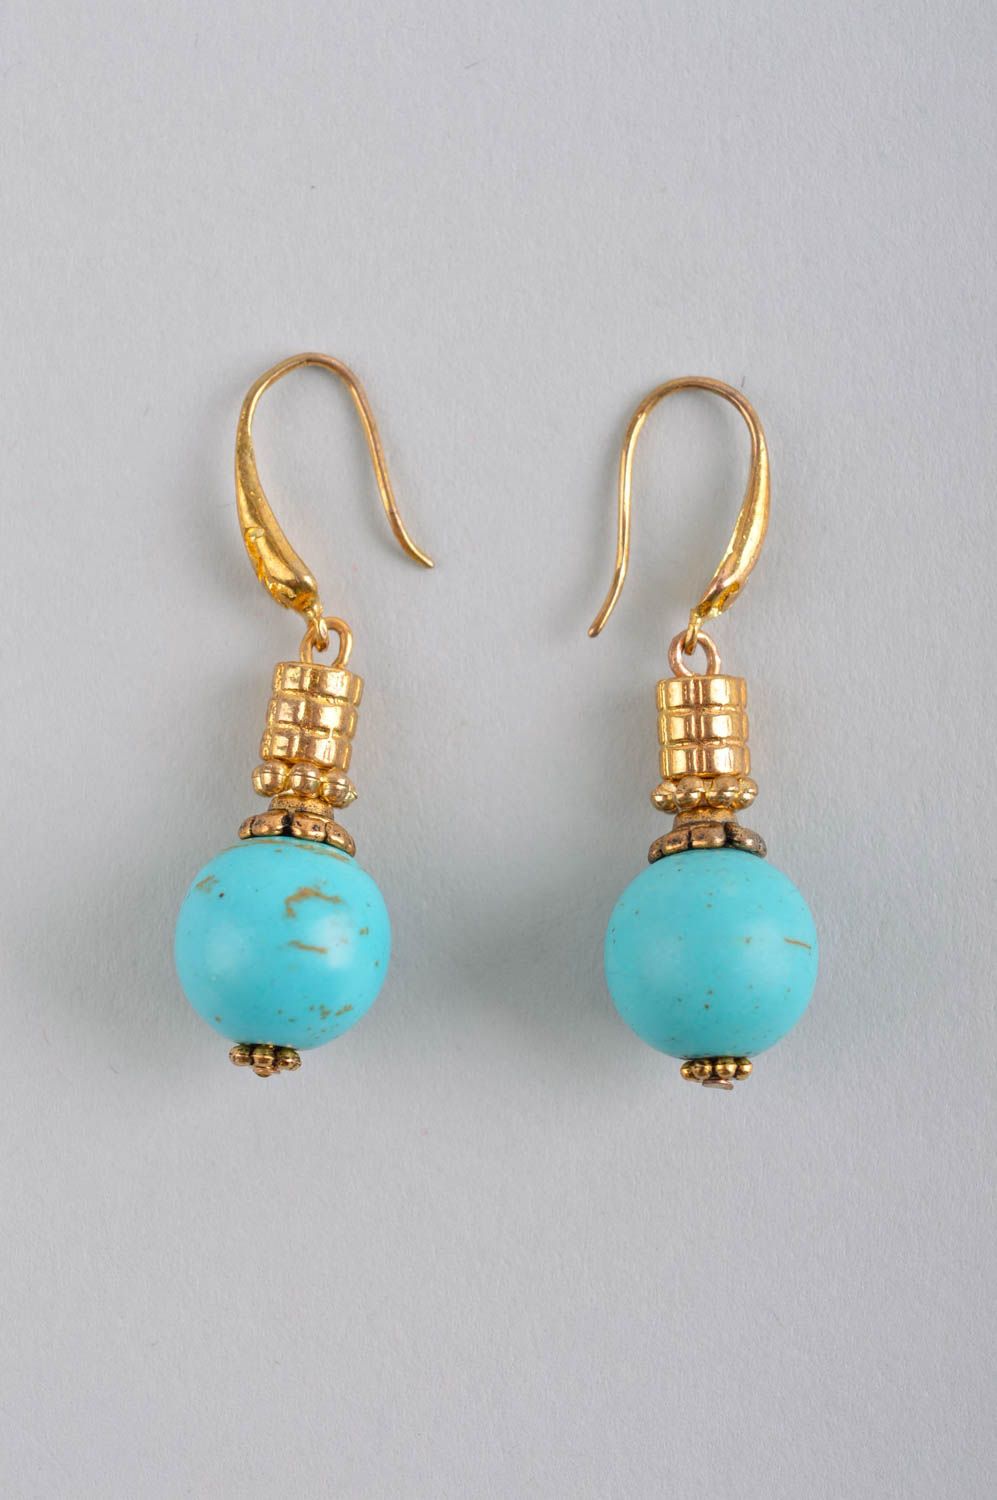 Handmade earrings designer jewelry turquoise earrings fashion accessories photo 3